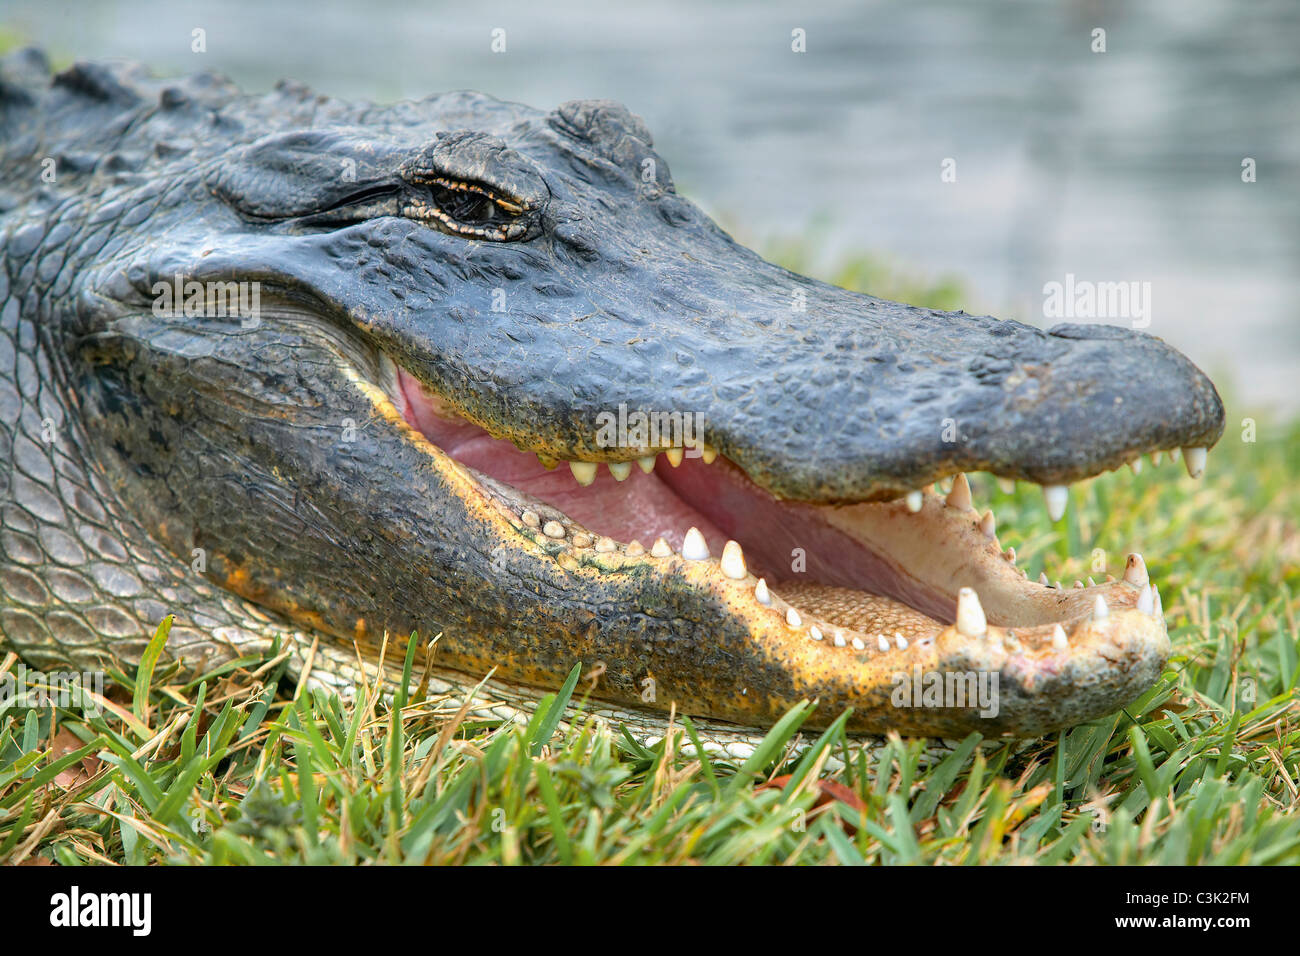 USA, Florida, Alligator, close up Stock Photo